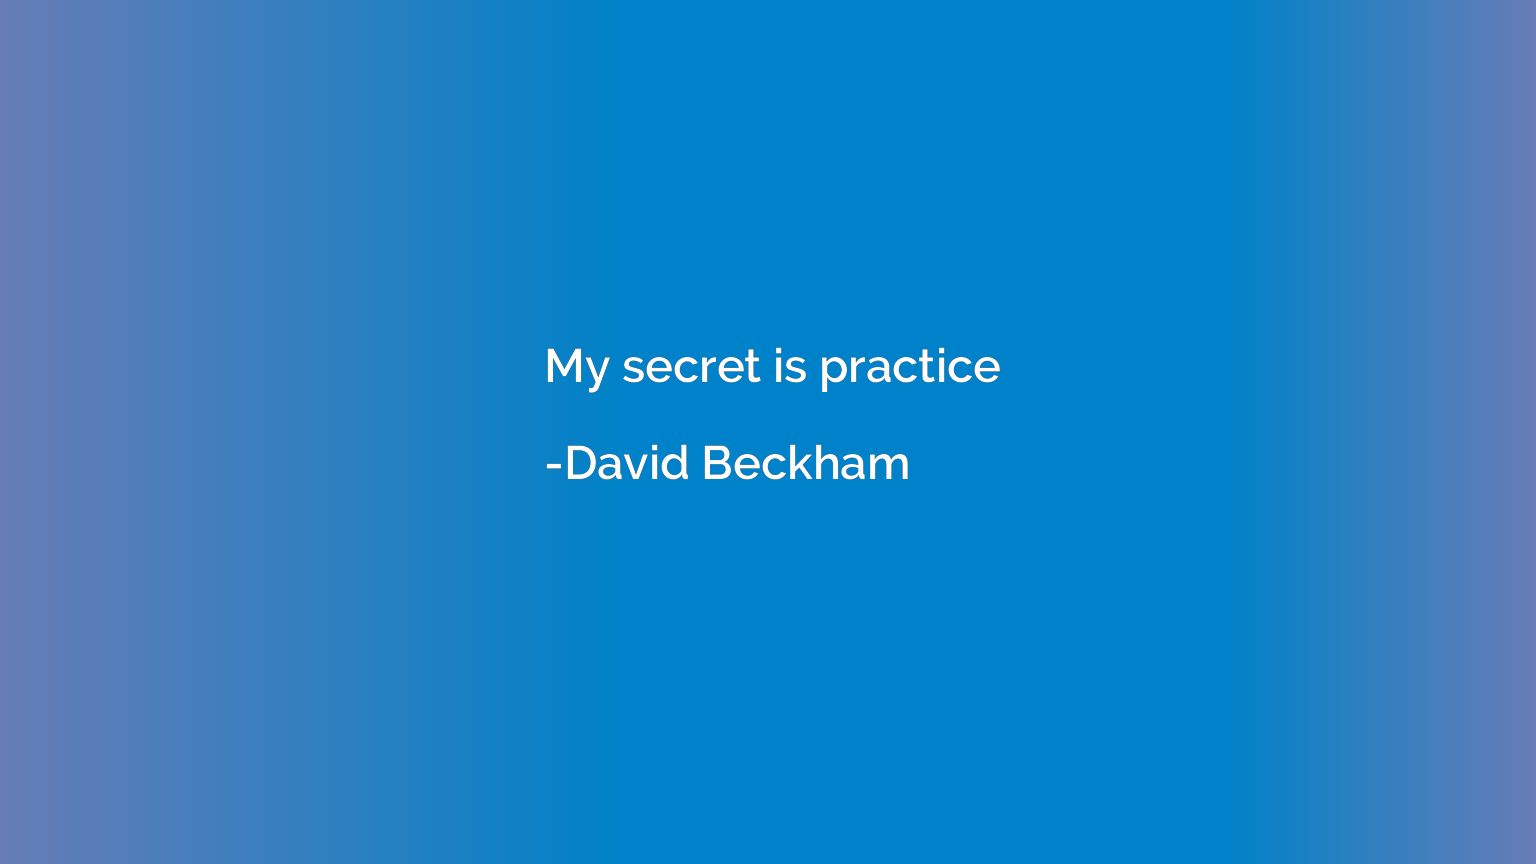 My secret is practice